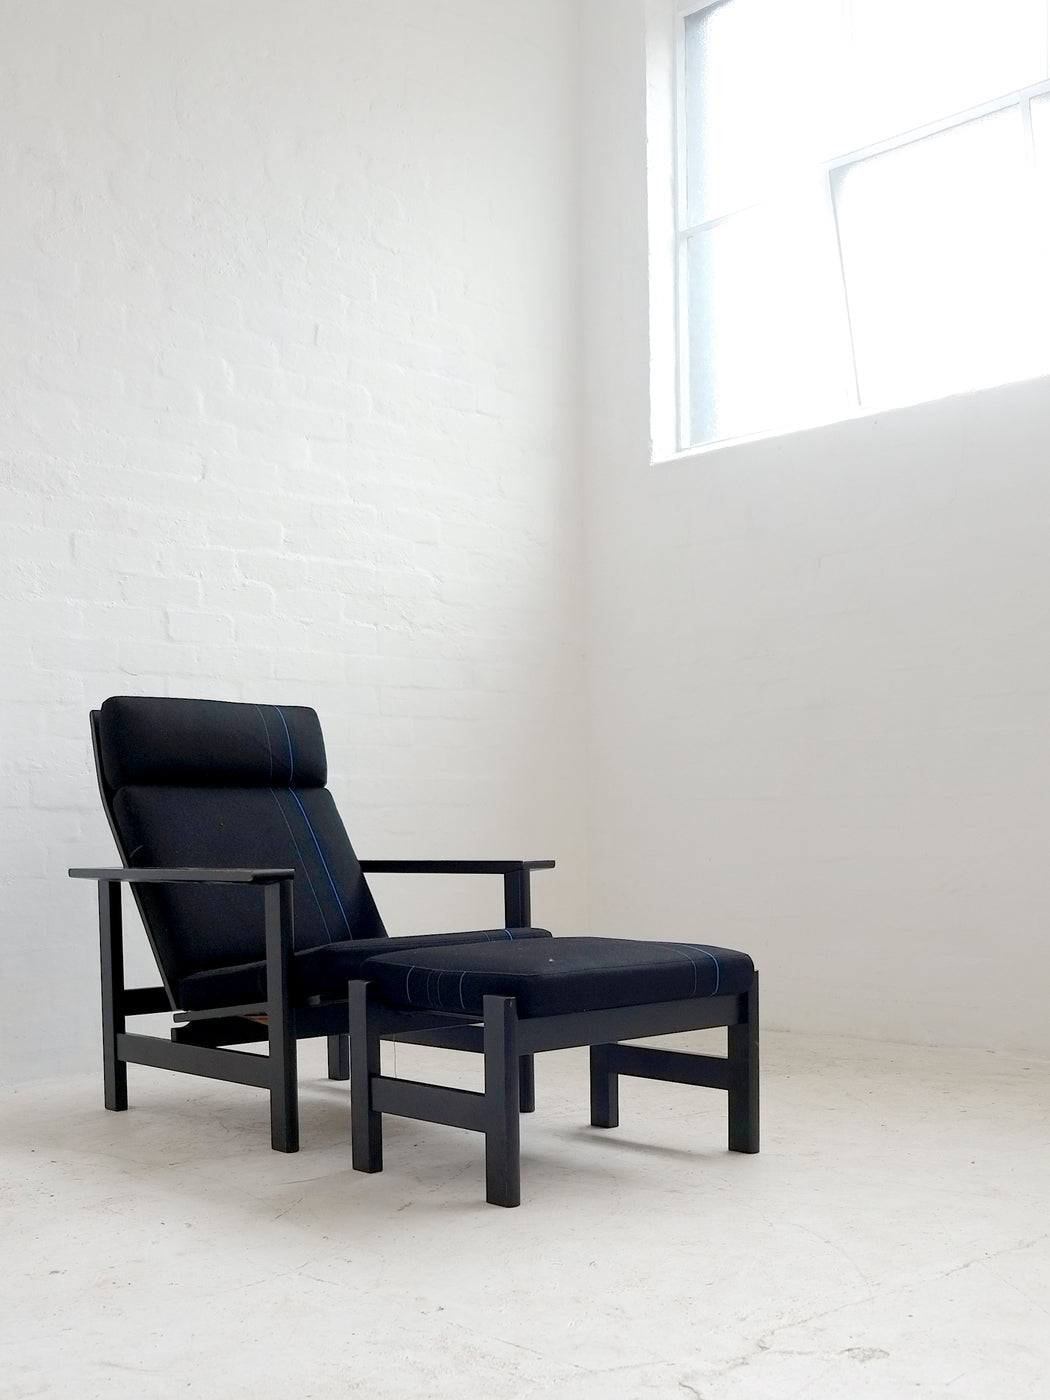 Soren Holst 'Model 2560' Chair & Footstool